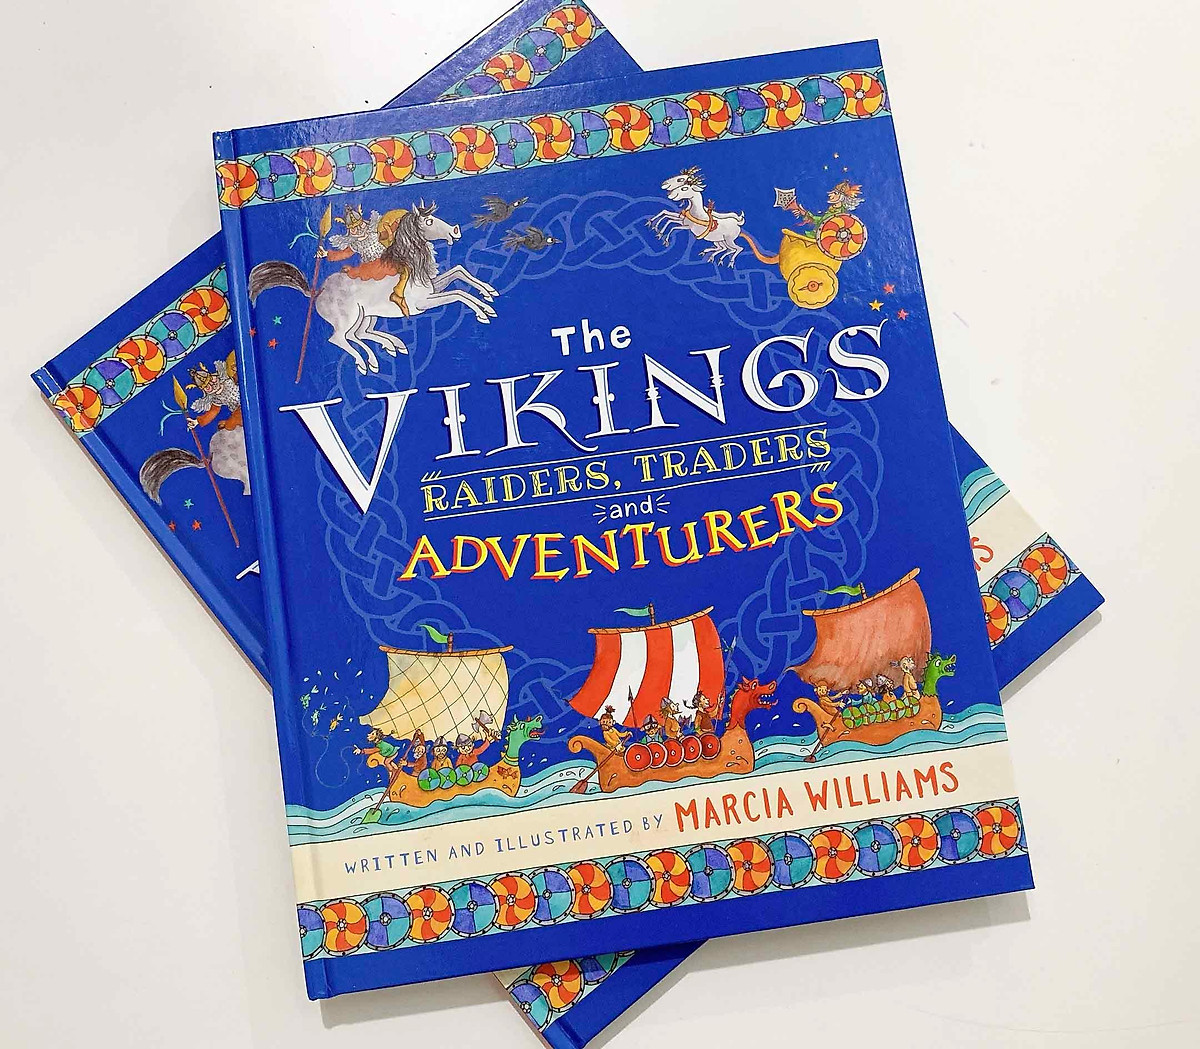 The Vikings: Raiders, Traders and Adventurers